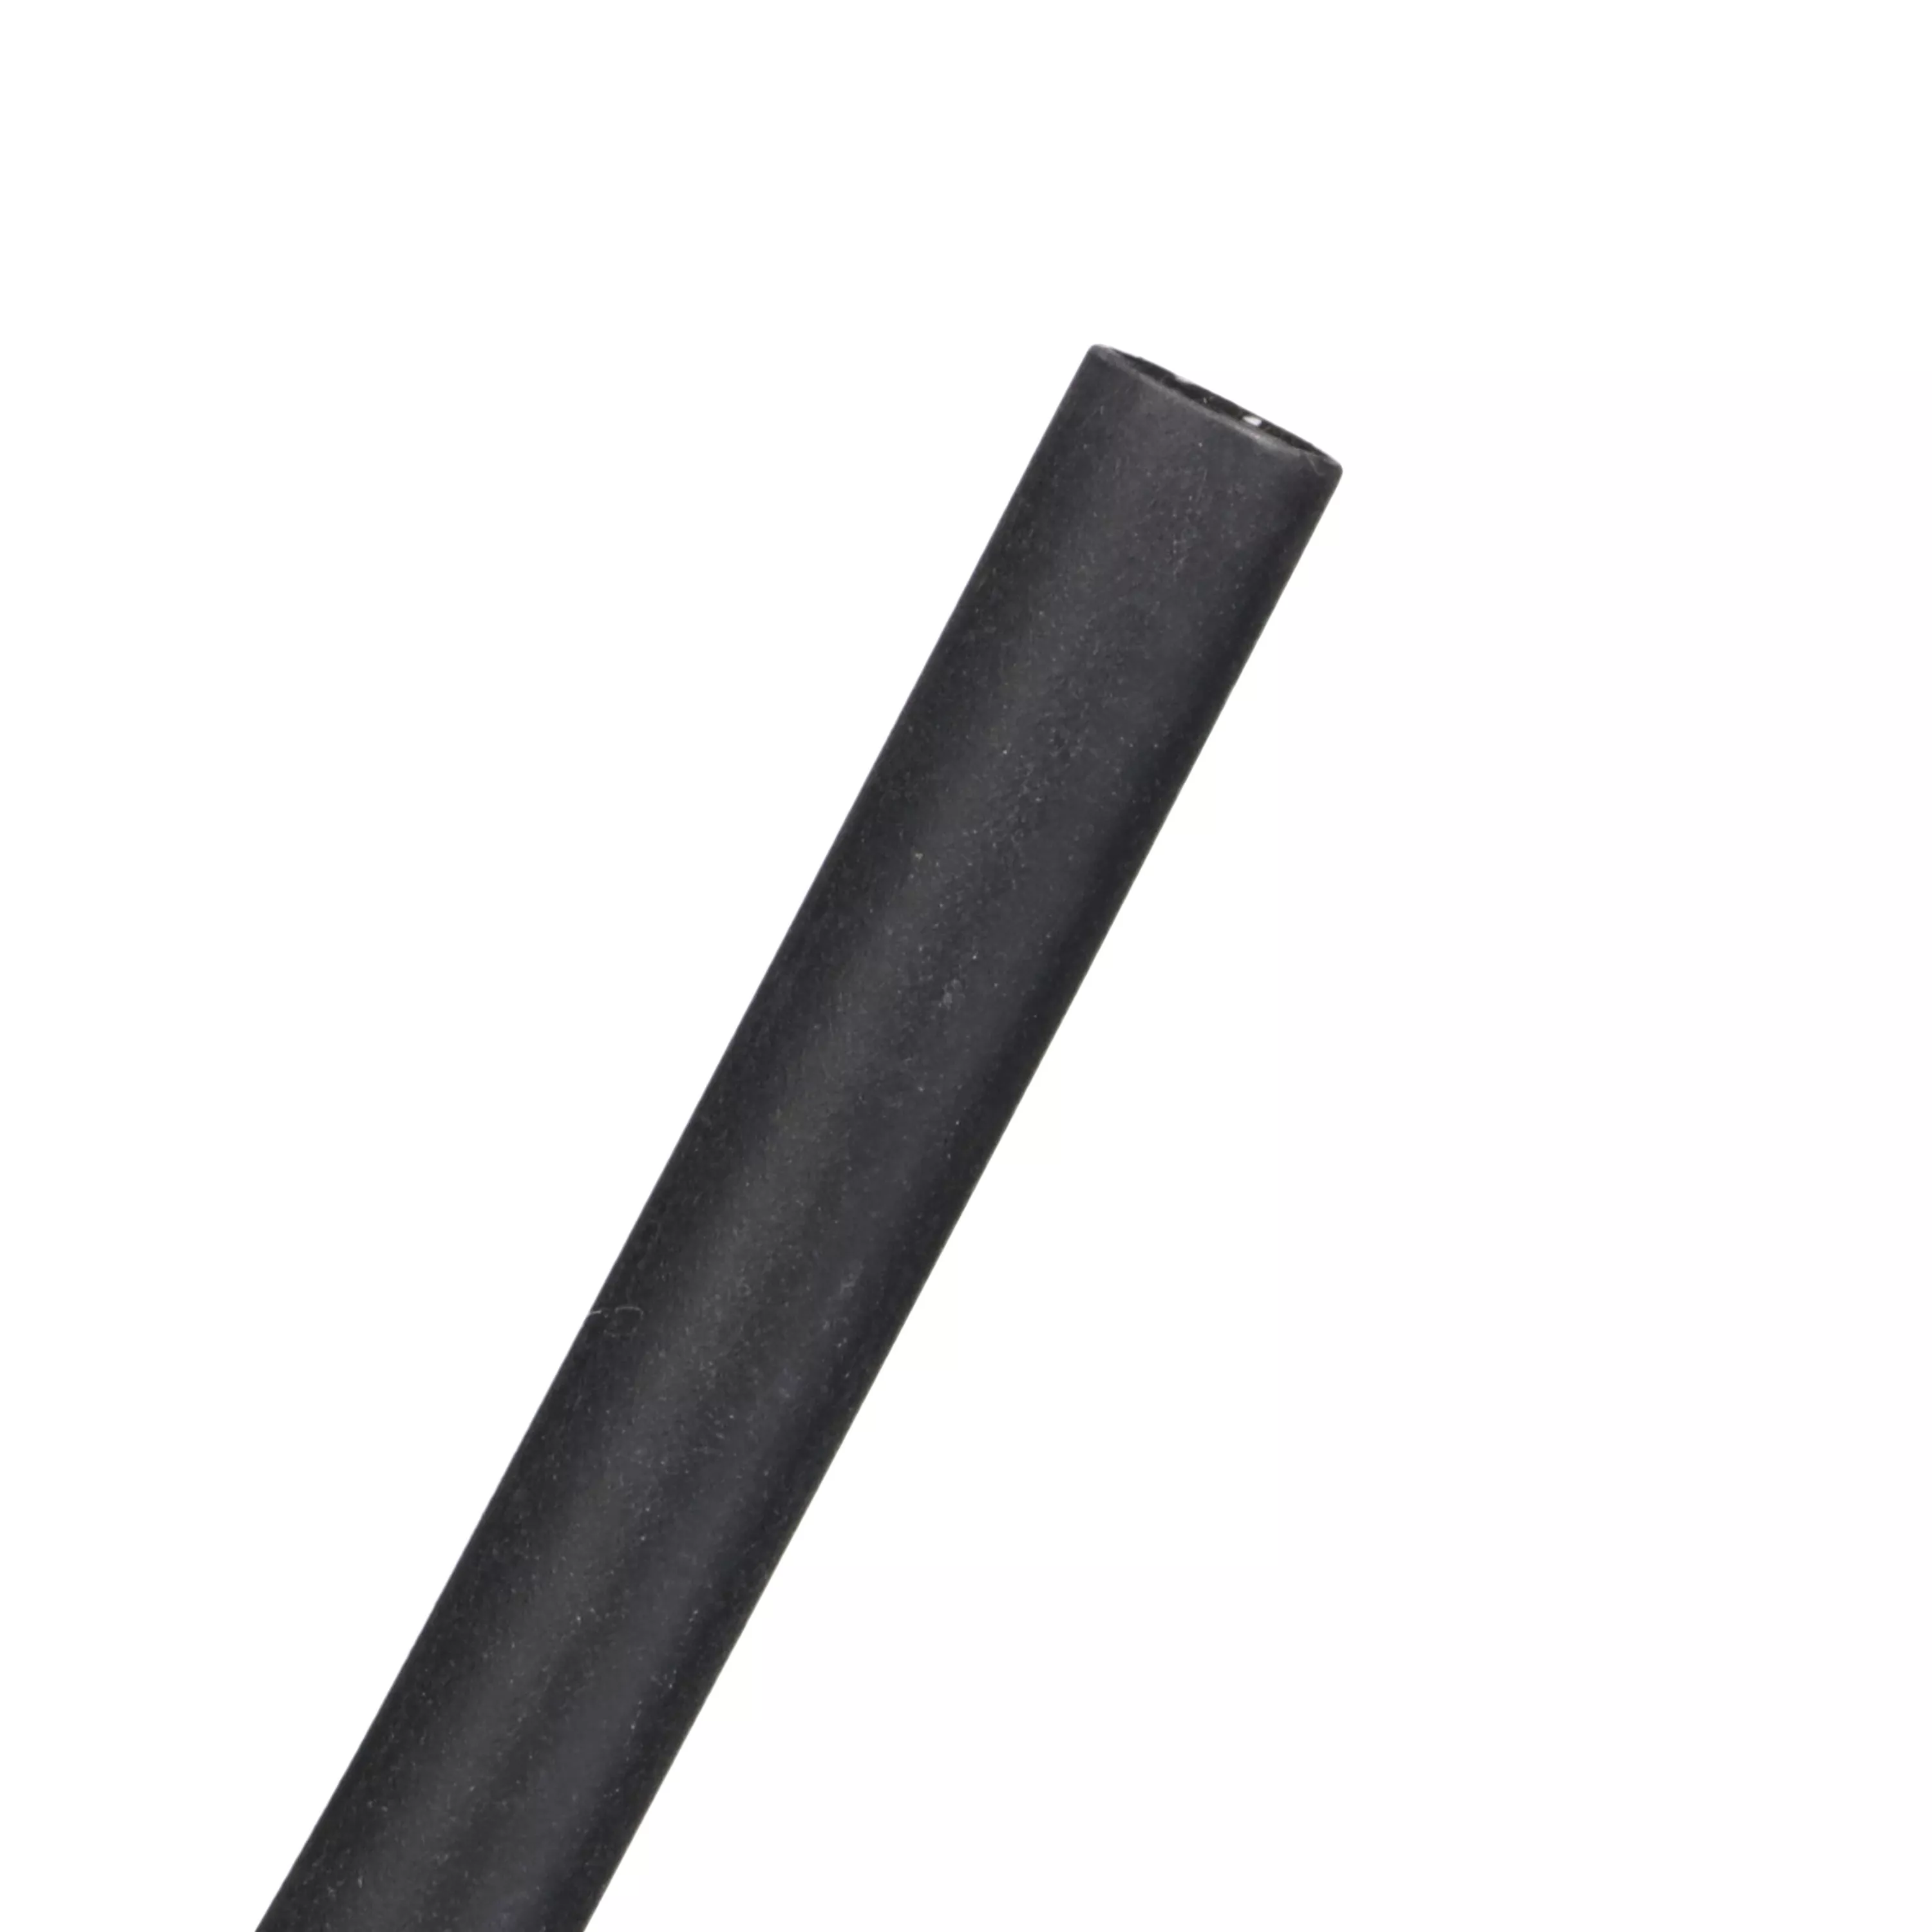 3M™ Thin-Wall Heat Shrink Tubing EPS-300, Adhesive-Lined,
3/16-48